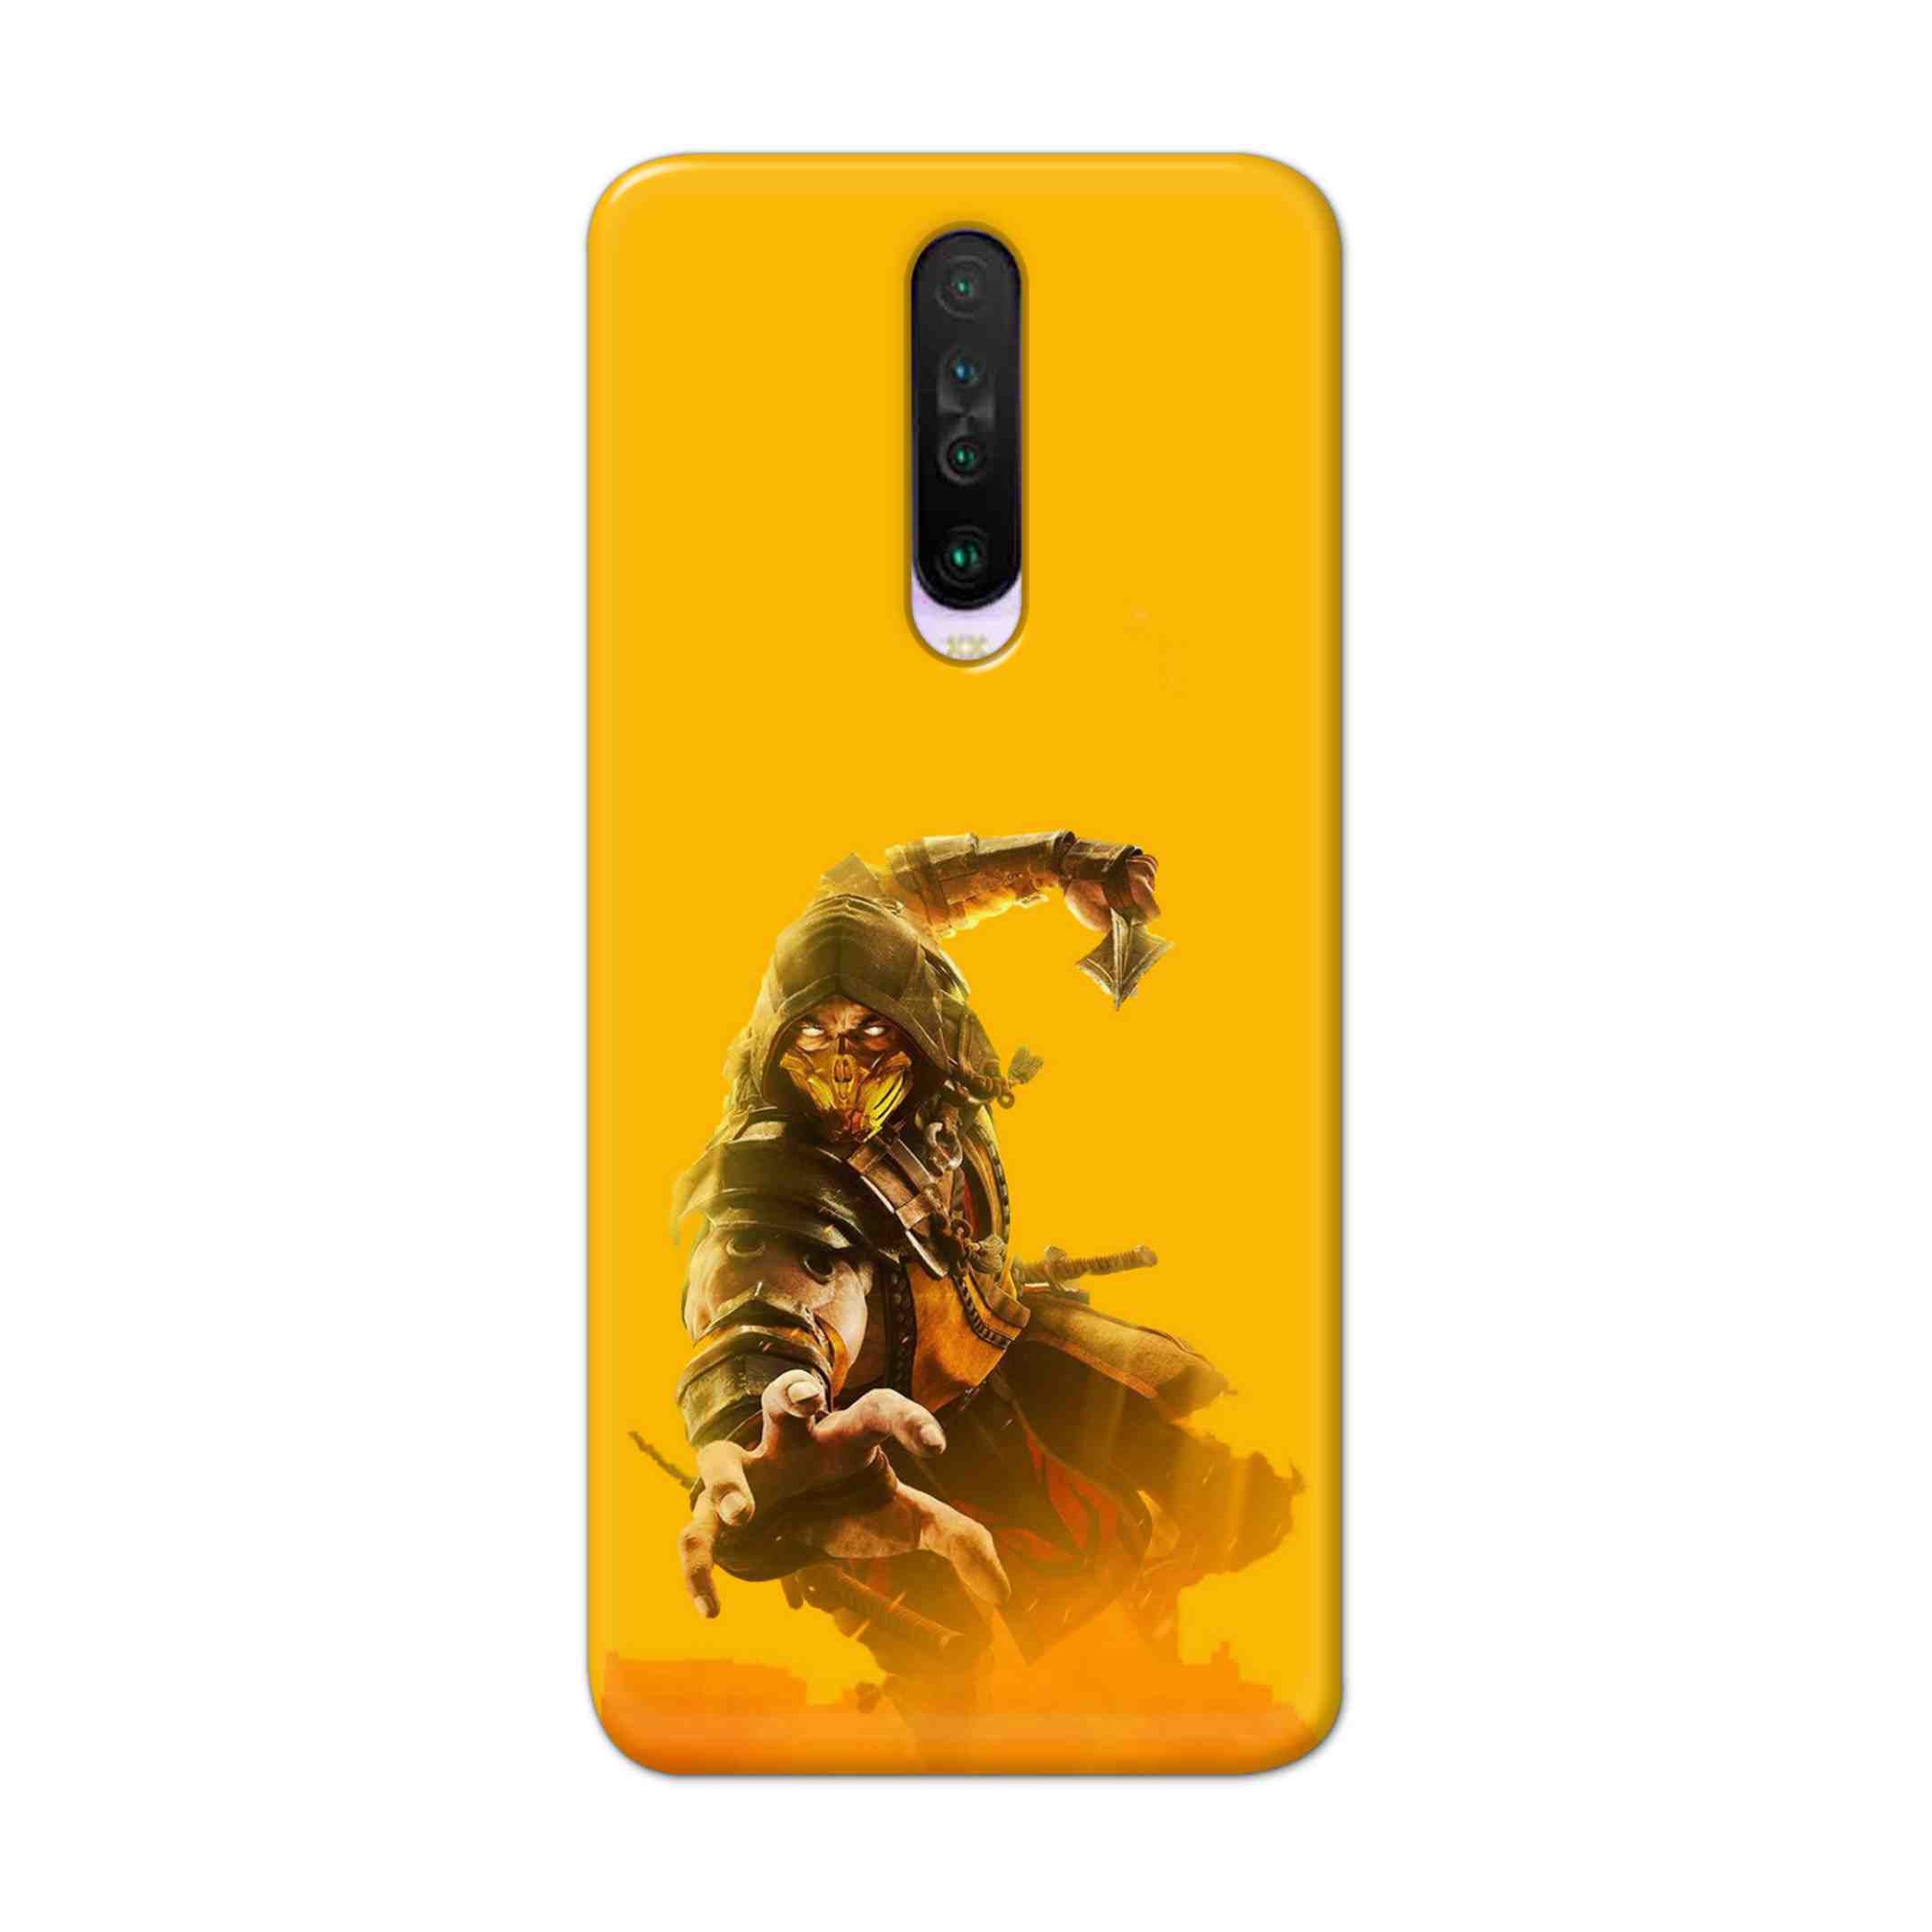 Buy Mortal Kombat Hard Back Mobile Phone Case Cover For Poco X2 Online